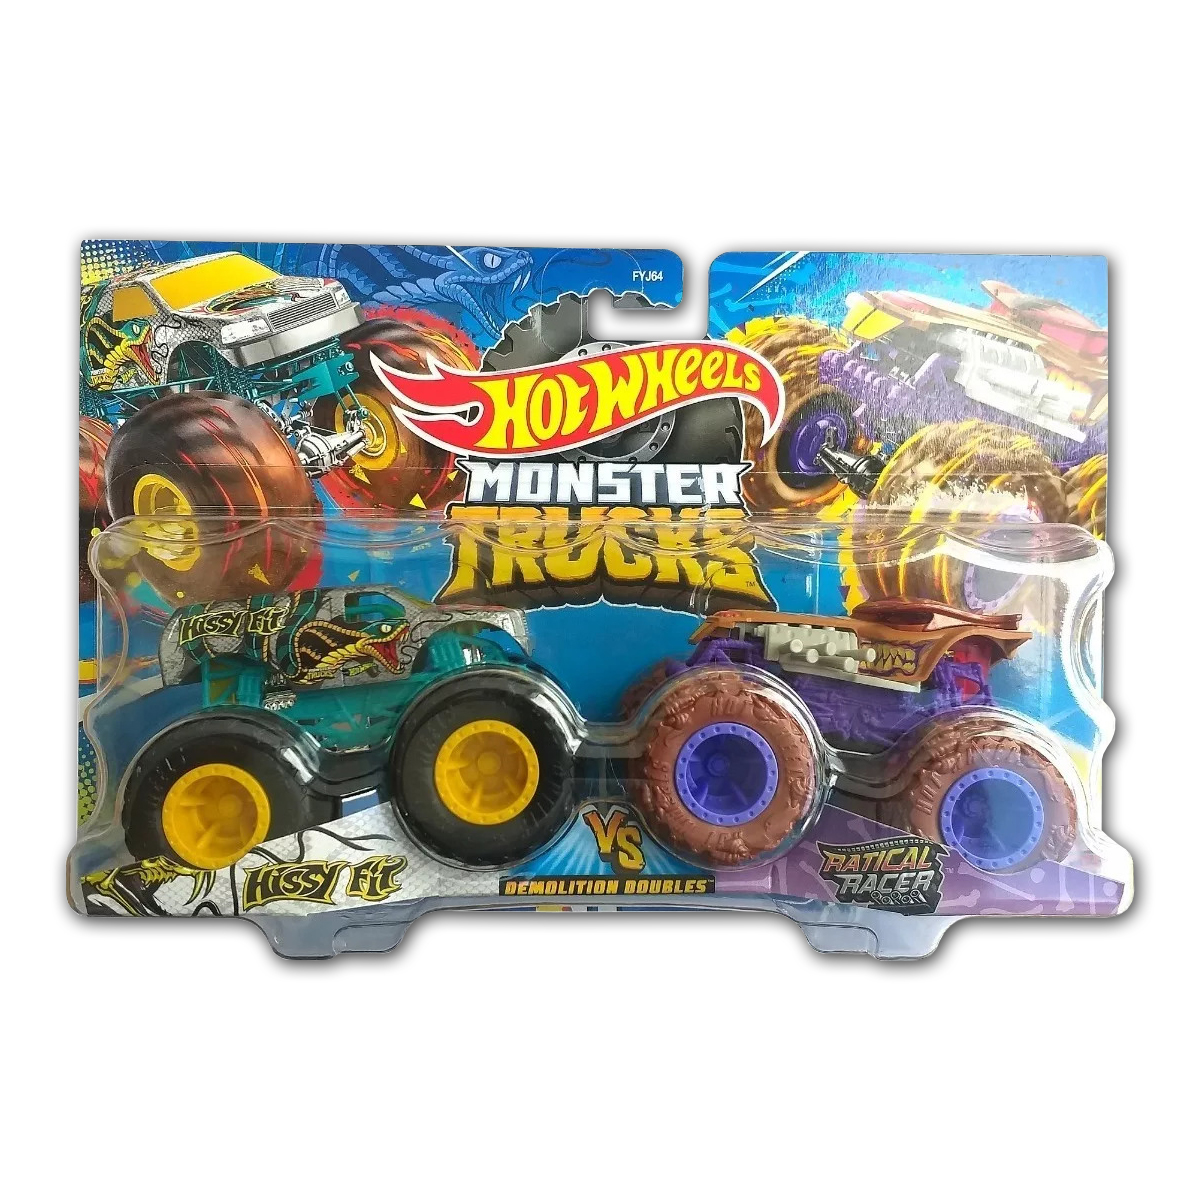 Carrinho Duplo Hot Wheels Monster Truck 164 Hissy Fit Vs Ratical Race De Coração Shop 8961